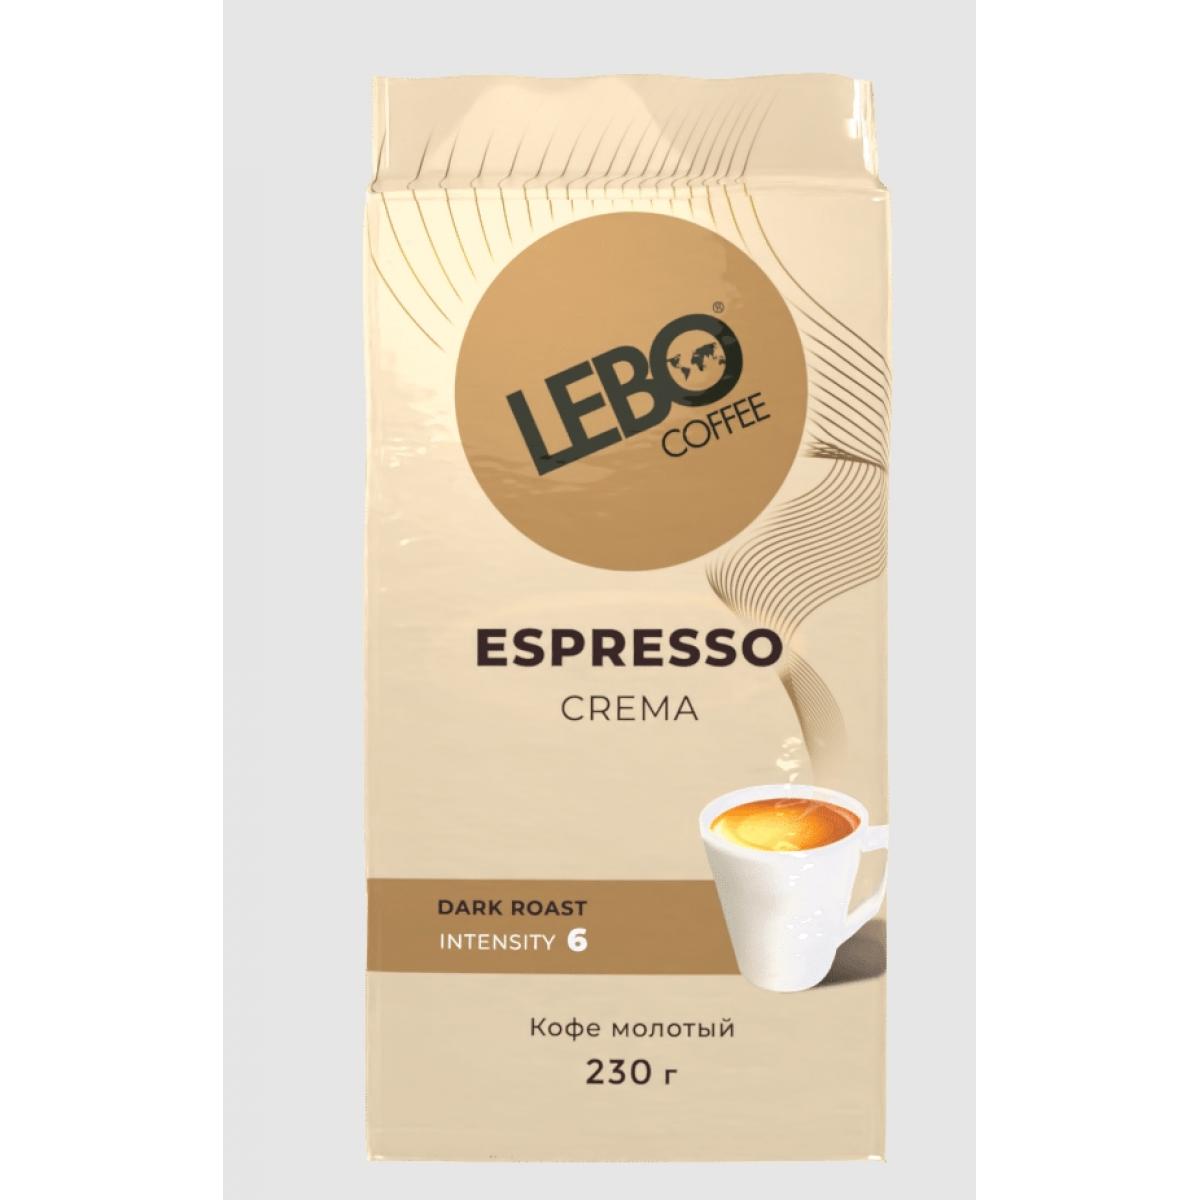 Кофе Lebo Espresso crema 230г.